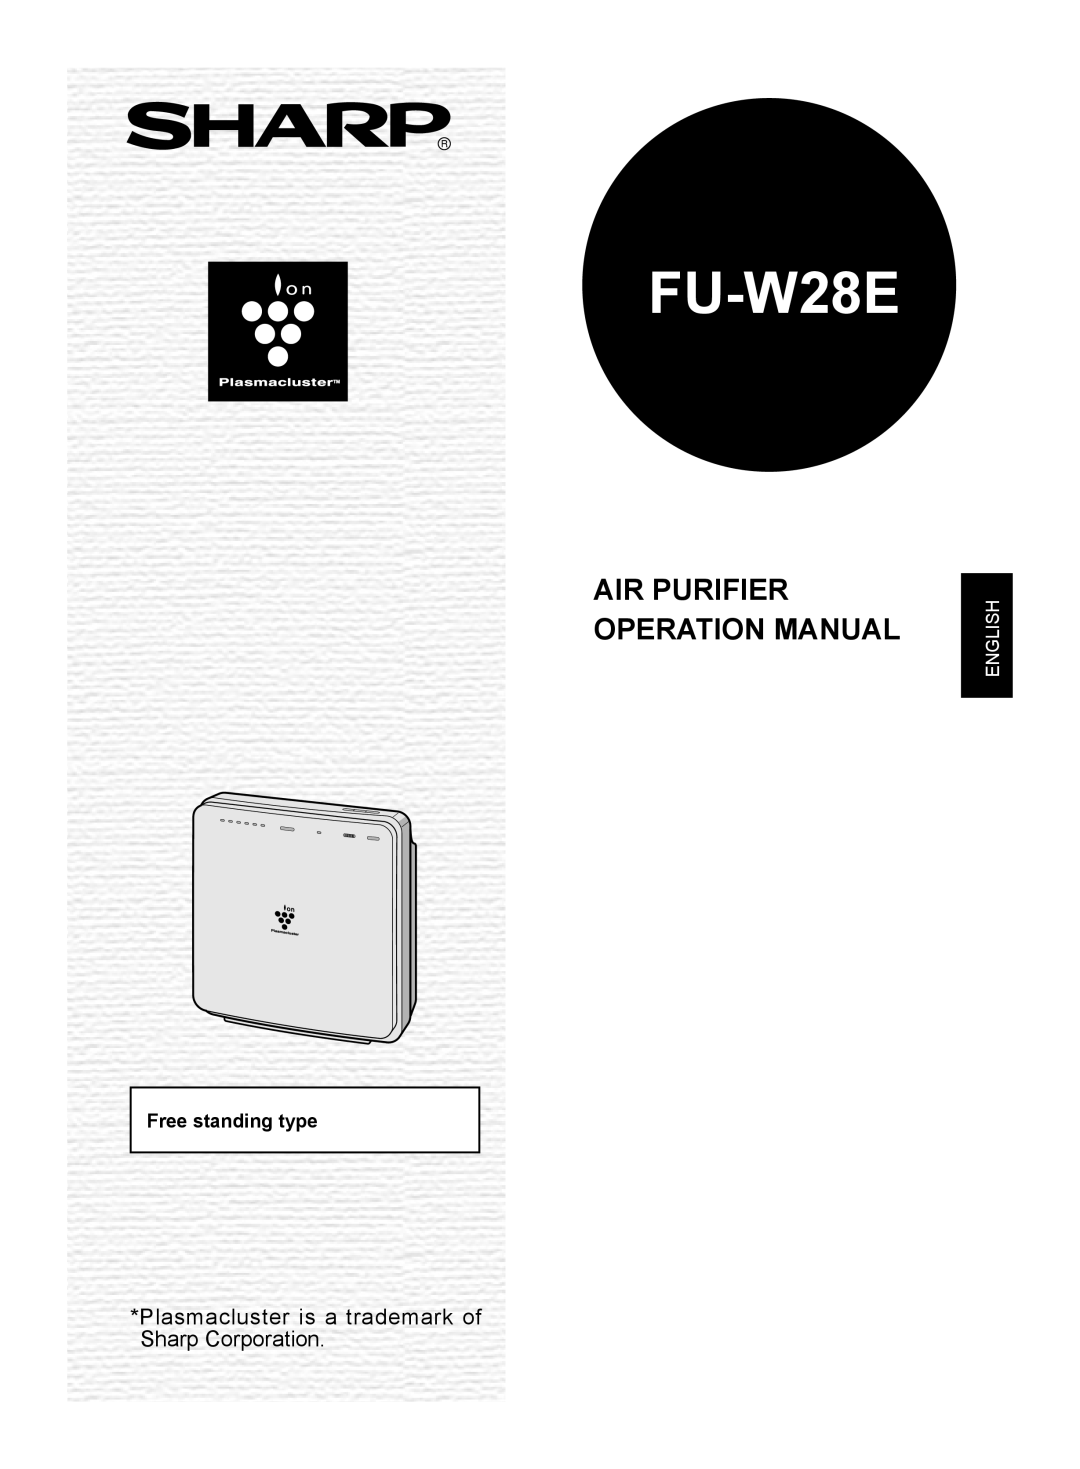 Sharp FU-W28E operation manual Воздухоочиститель, Руководство По, Эксплуатации, Air Purifier, Operation Manual, Deutsch 